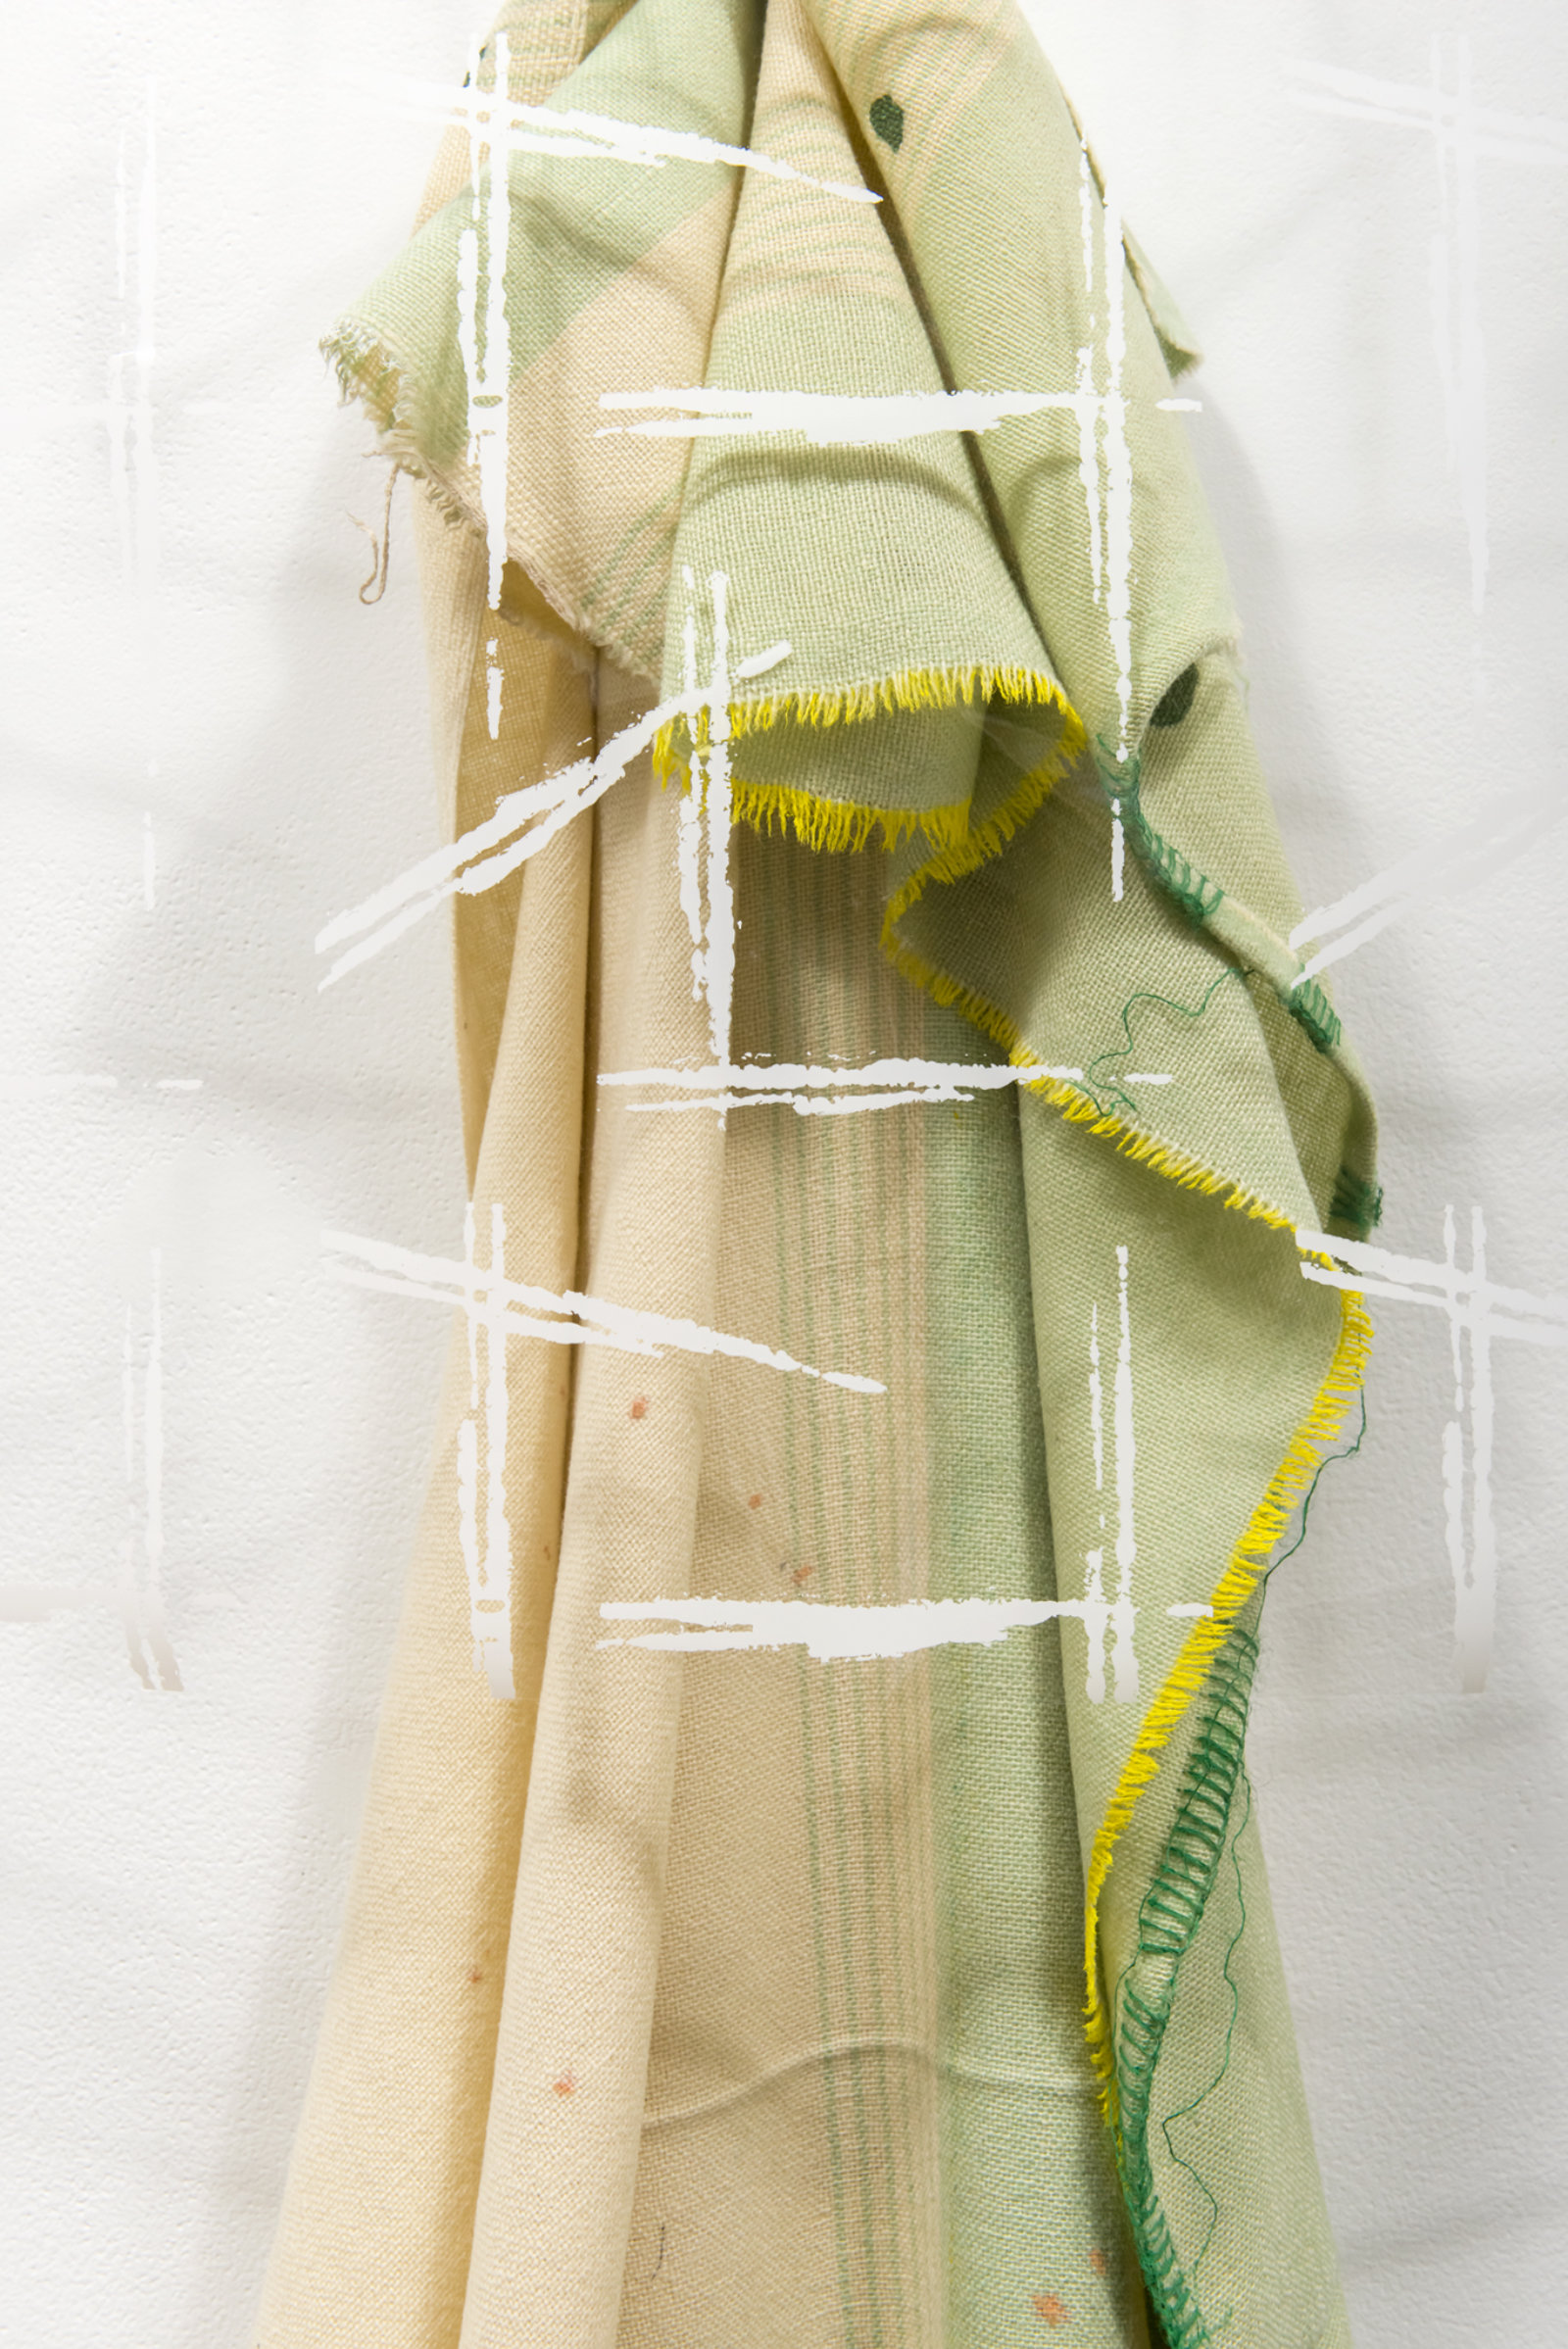 Liz Magor, Freestyle (Green Stripes) (detail), 2017, wool, cellophane, steel, 100 x 30 x 10 in. (254 x 76 x 27 cm)